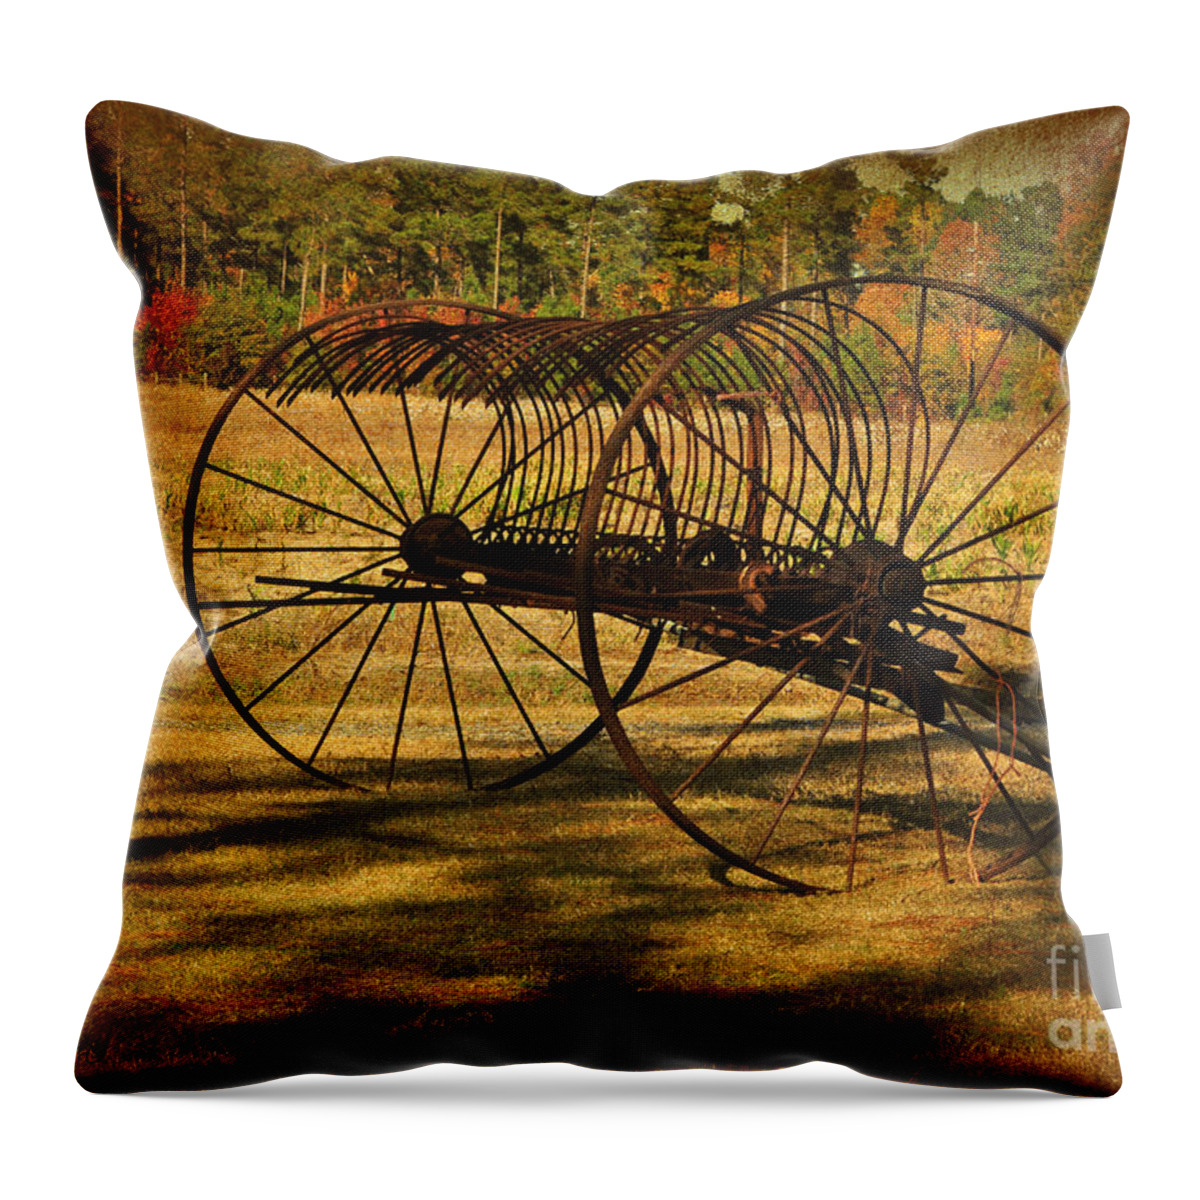 Hay Rake Throw Pillow featuring the photograph Old Rusty Hay Rake by Kathy Baccari